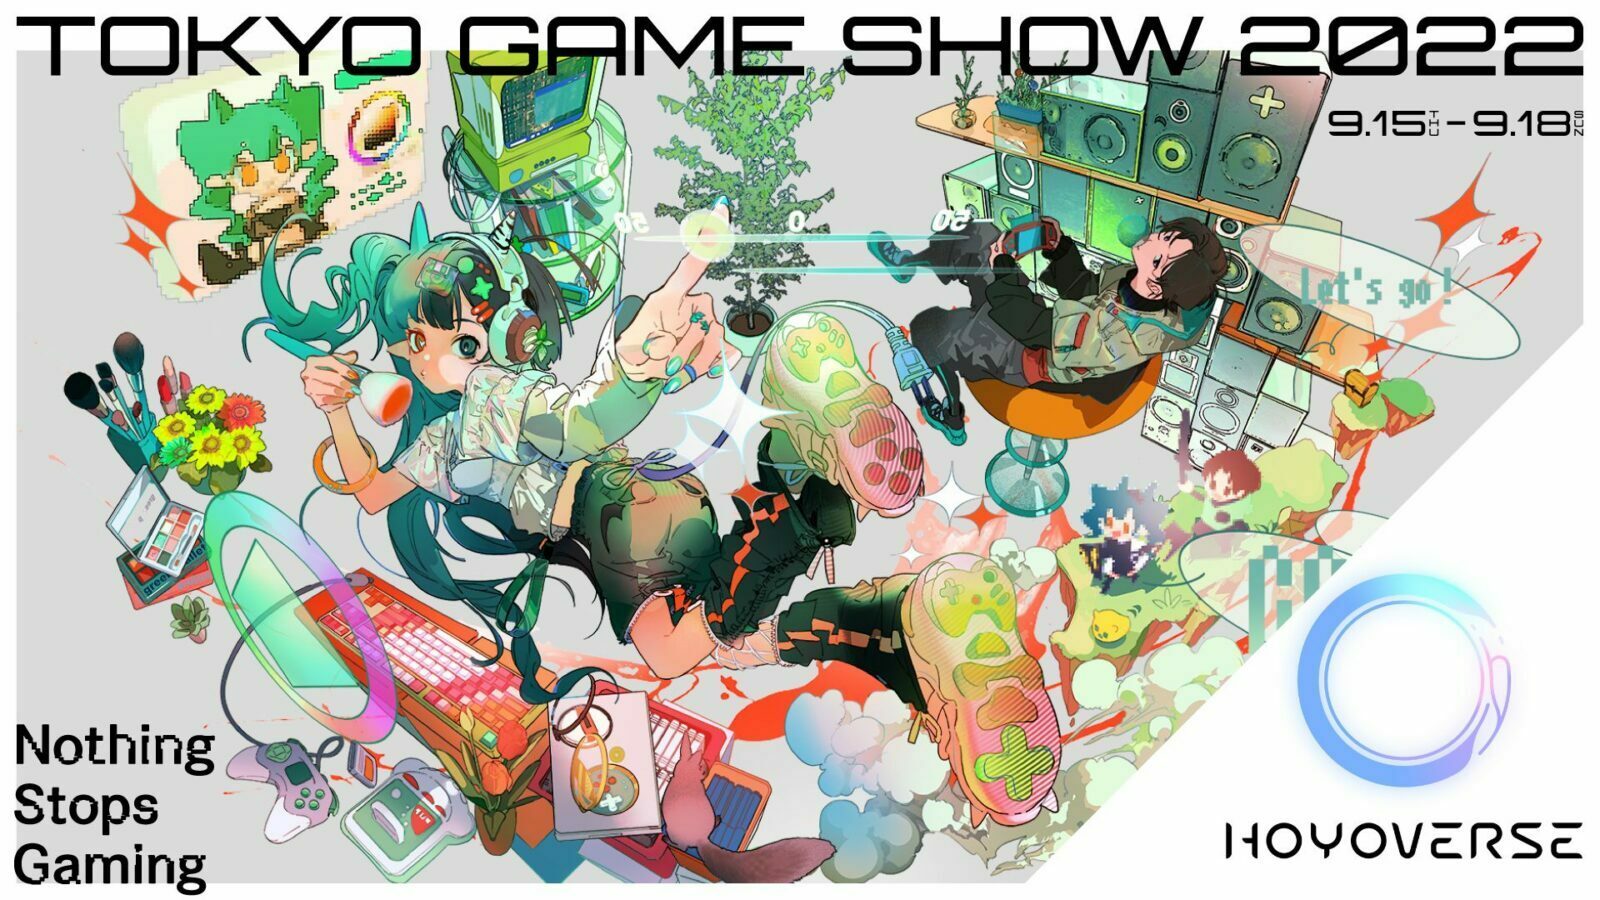 Hoyoverse sera présent au Tokyo Game Show 2022